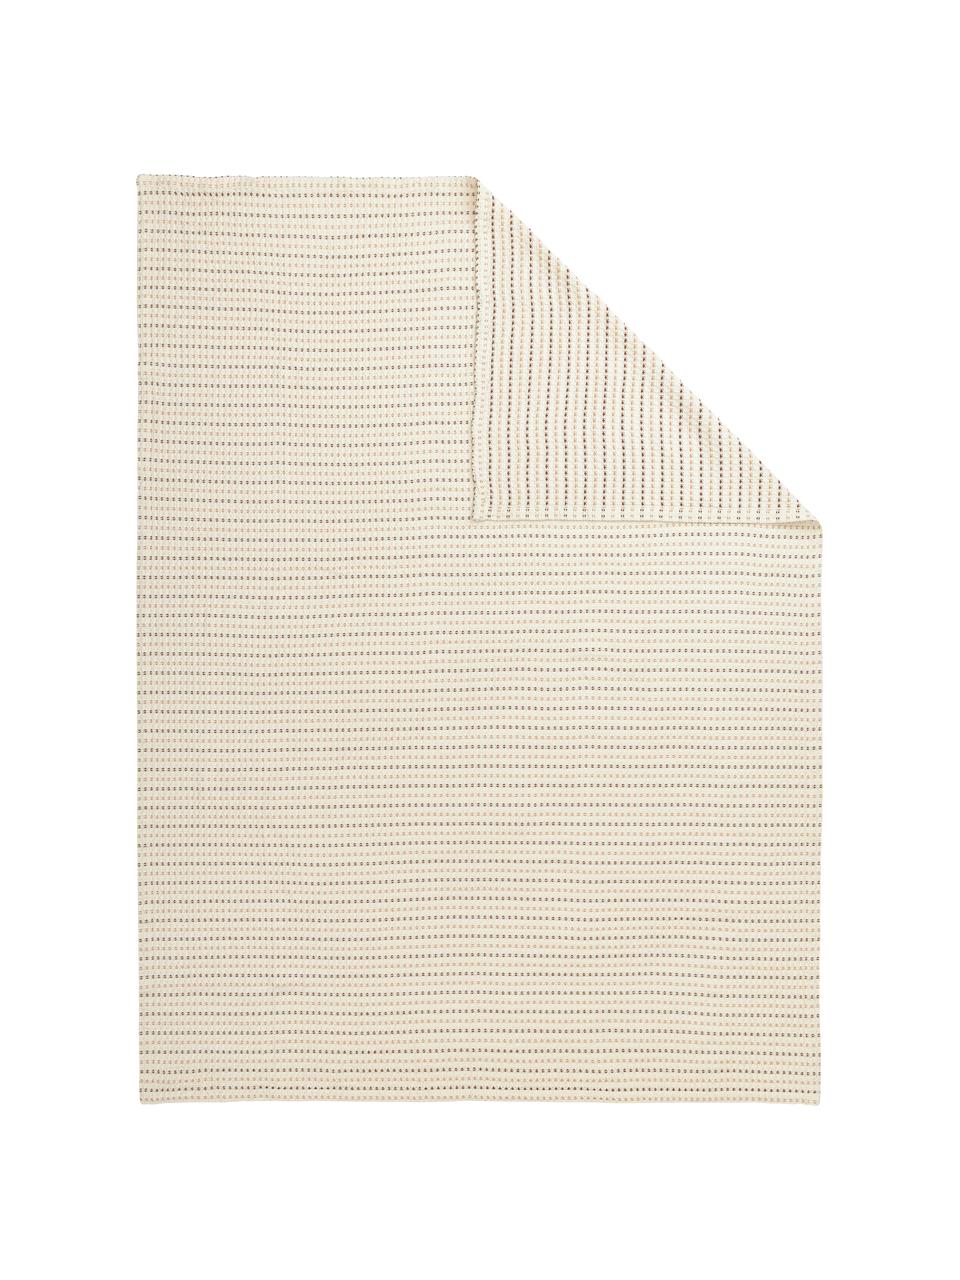 Colcha de algodón con estructura gofre Kimber, 100% algodón, Blanco crema, tonos marrones, An 130 x L 170 cm